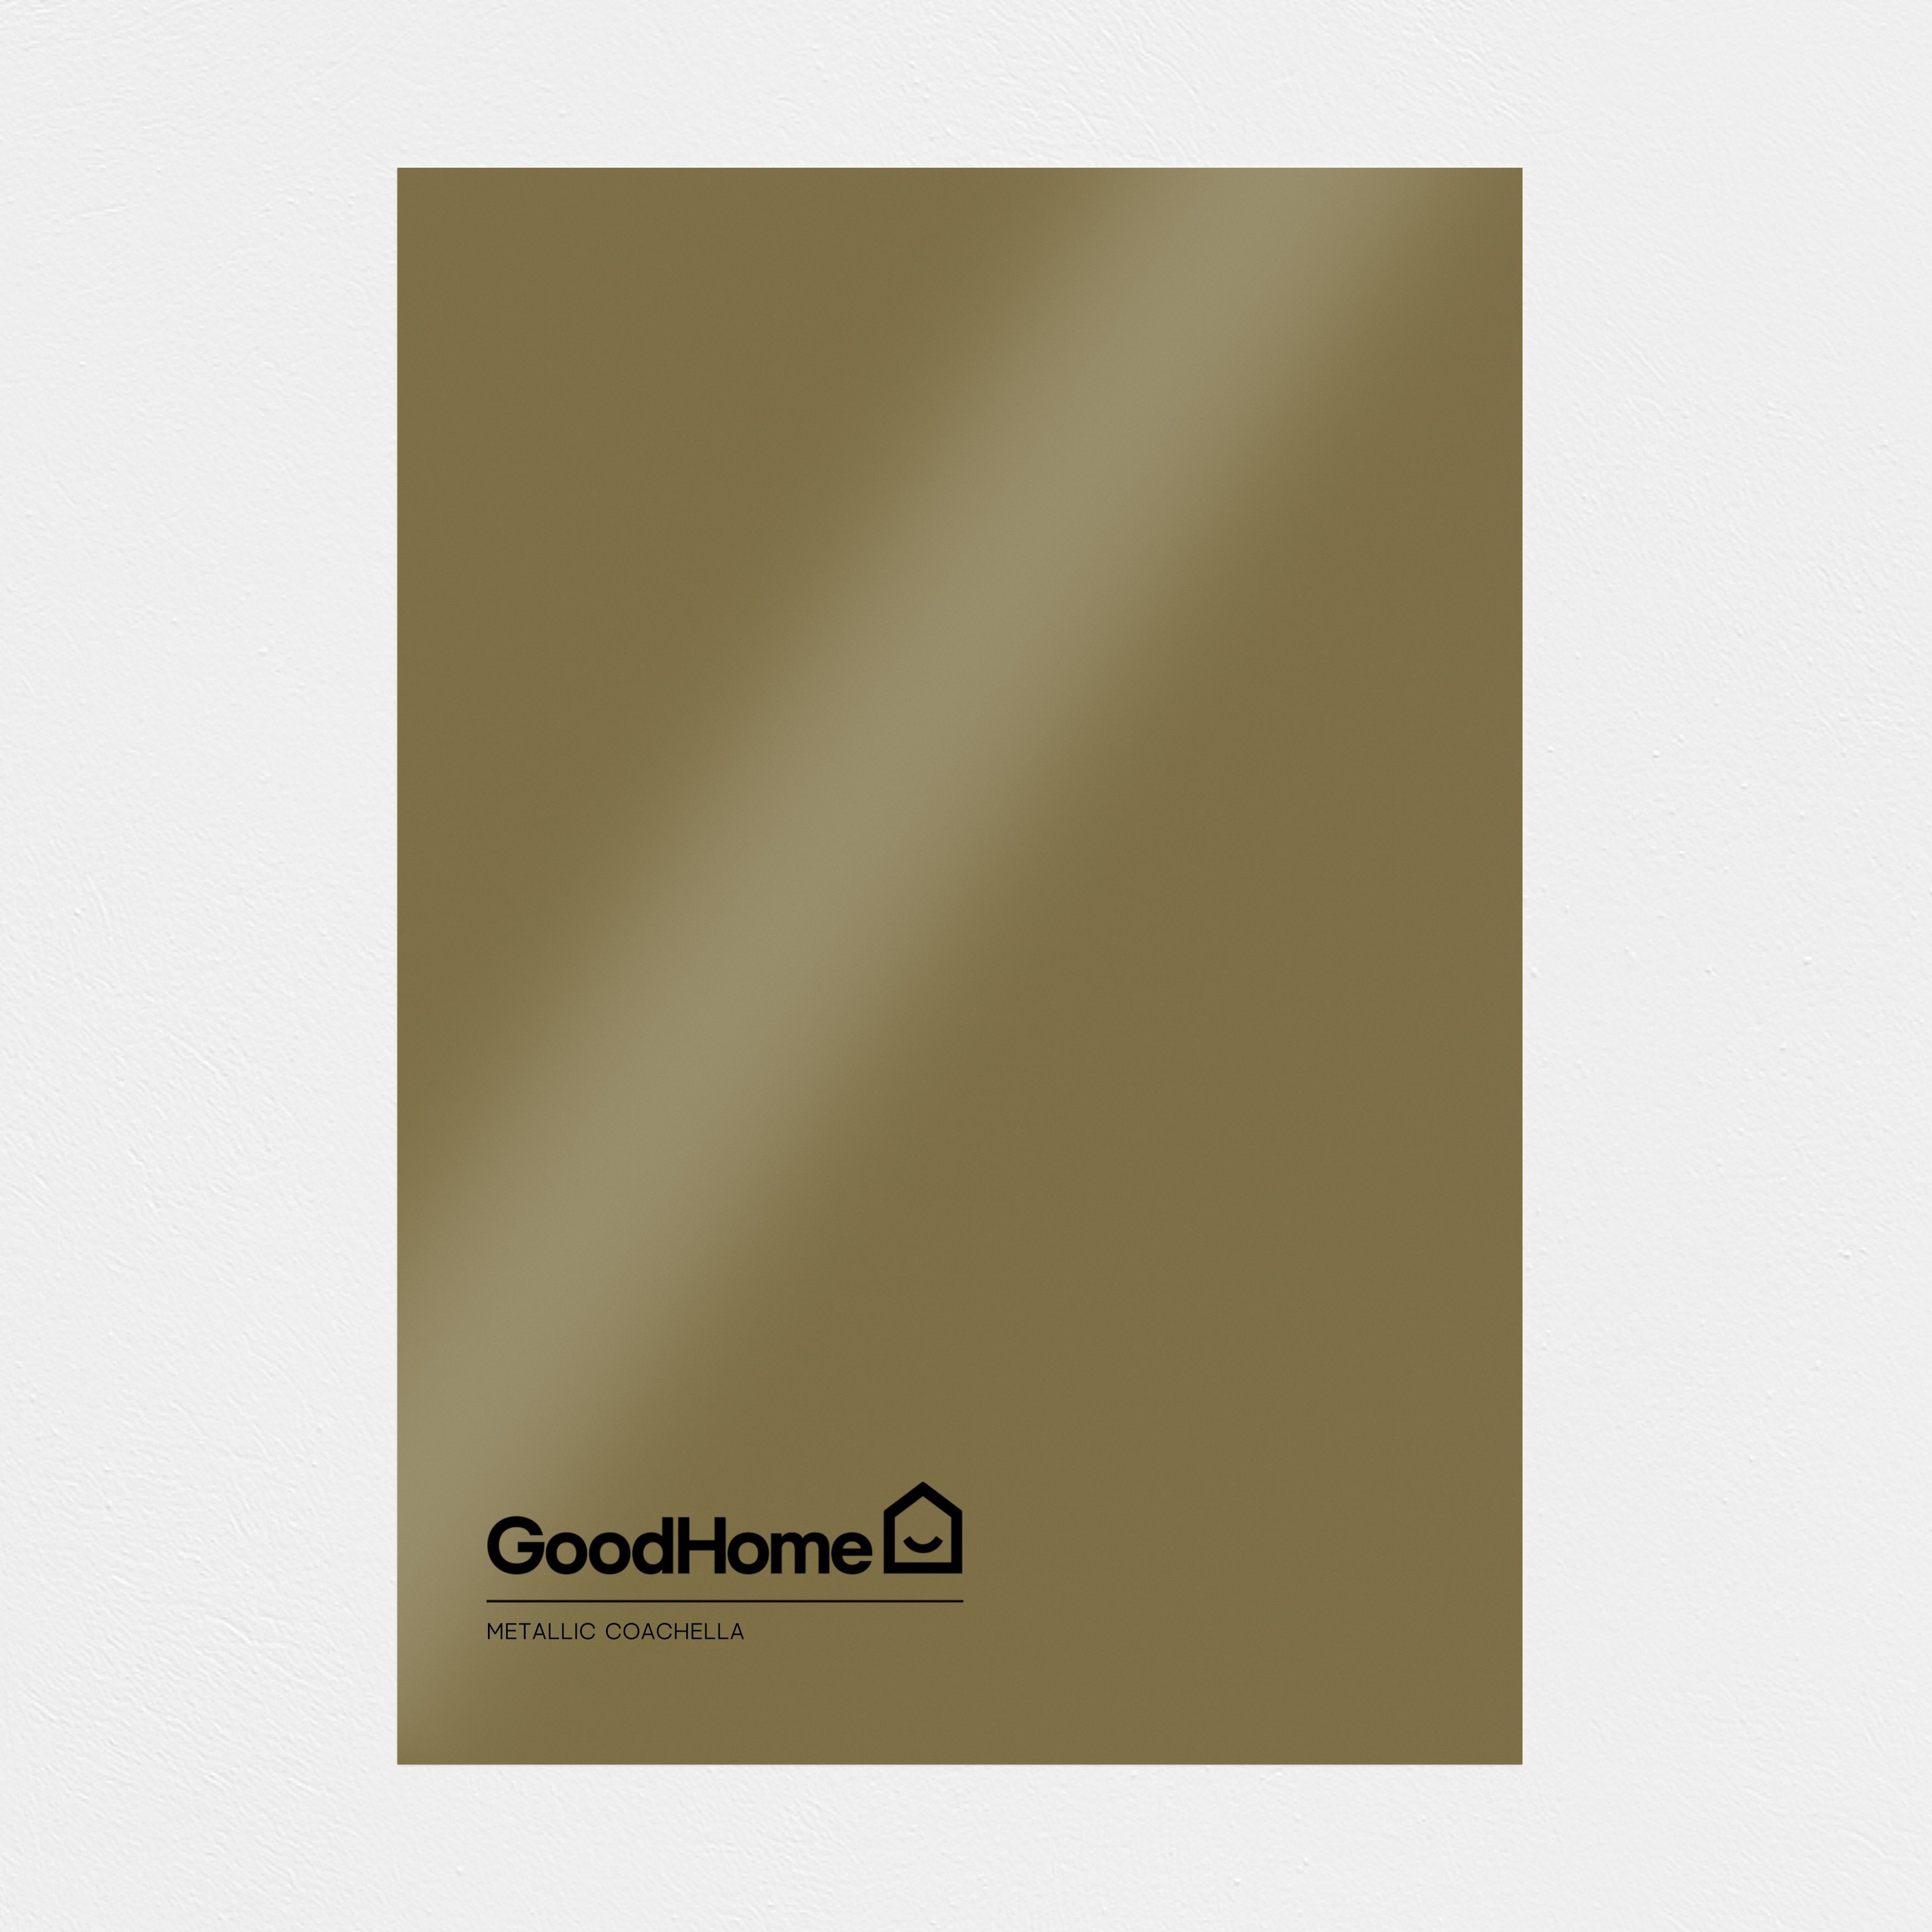 GoodHome Feature wall Coachella Metallic effect Emulsion paint, 2L